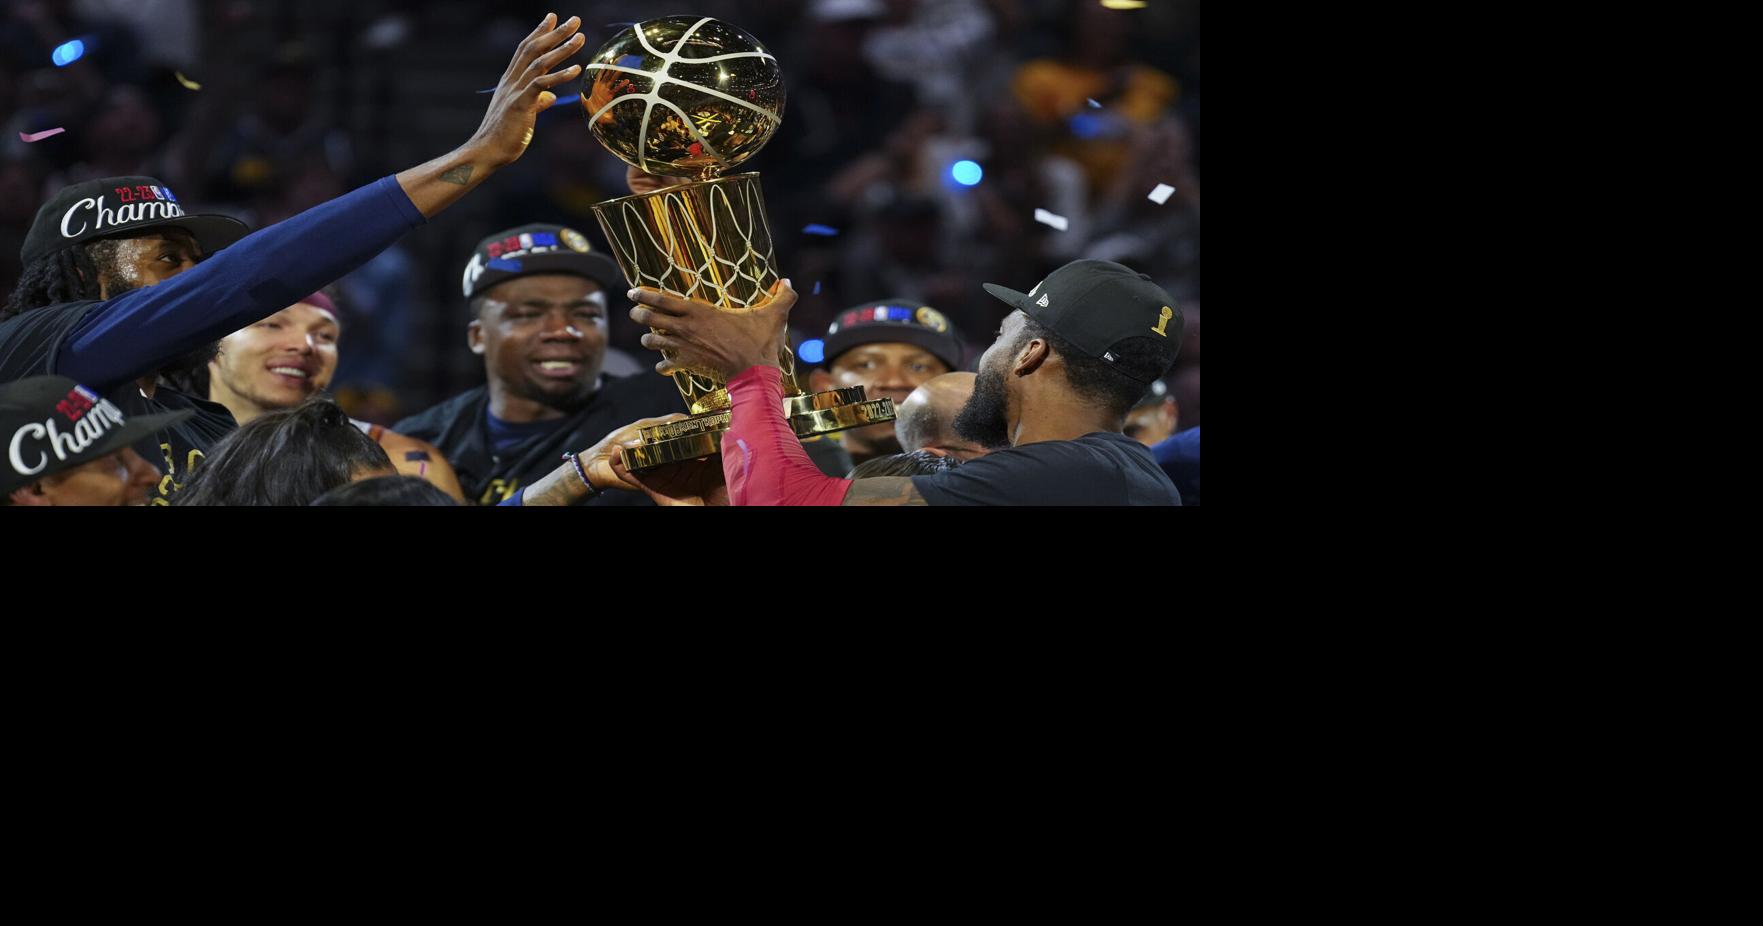 Warriors Odds to Win 2024 NBA Championship